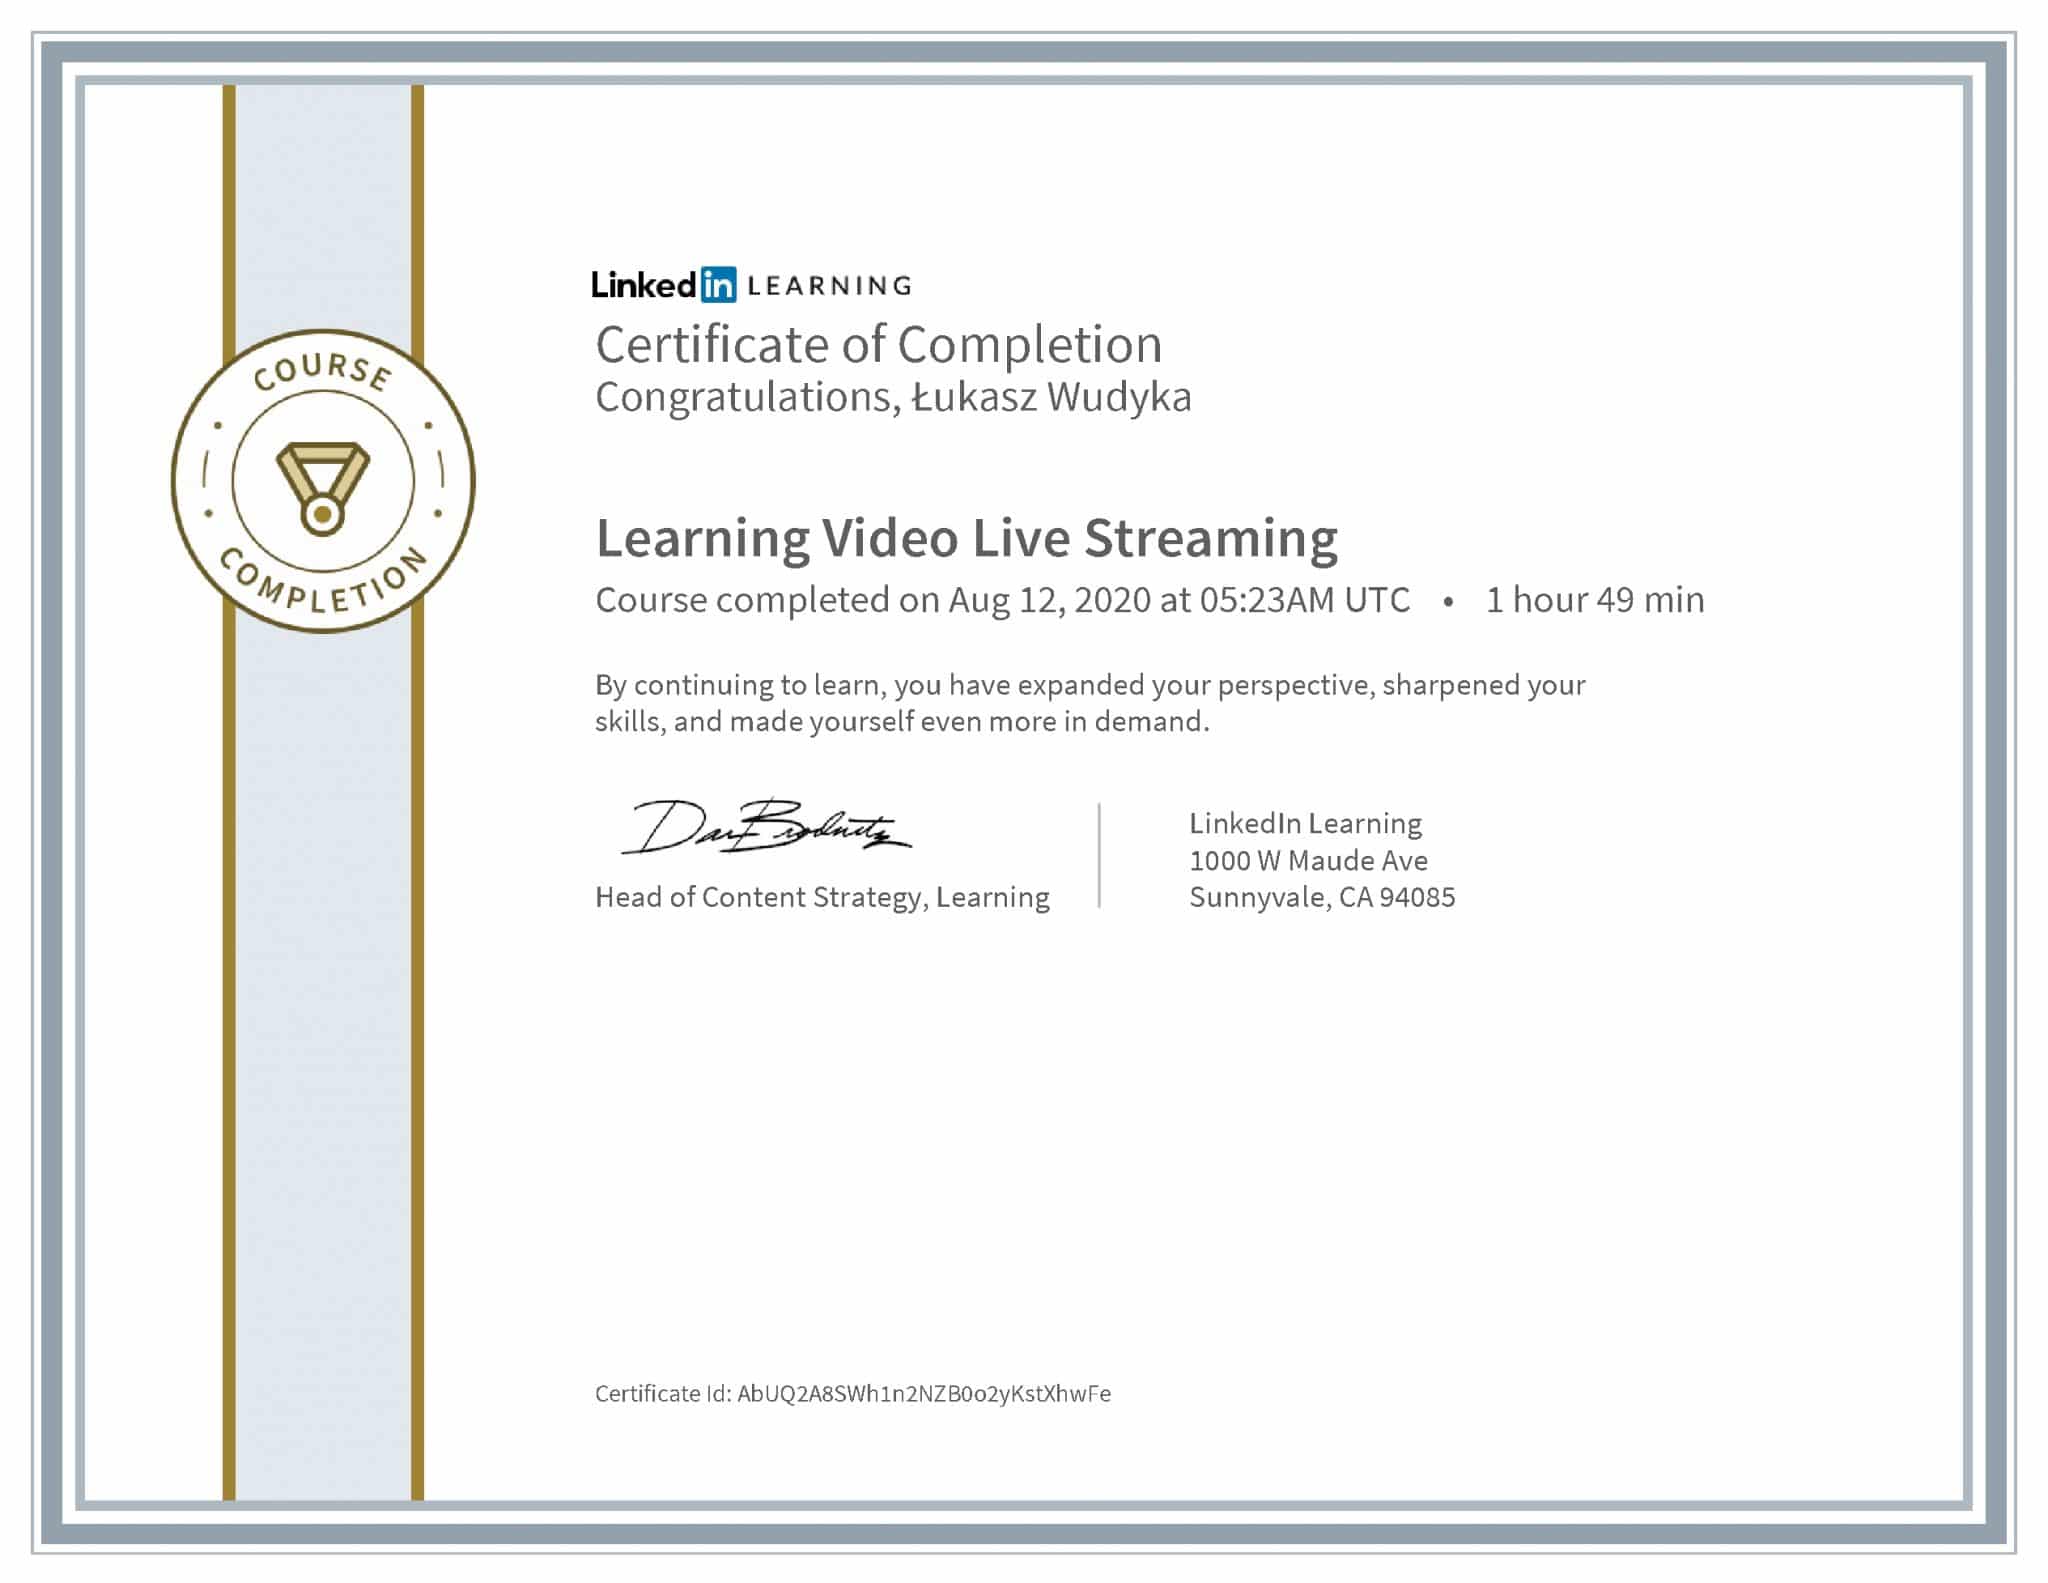 Łukasz Wudyka certyfikat LinkedIn Learning Video Live Streaming